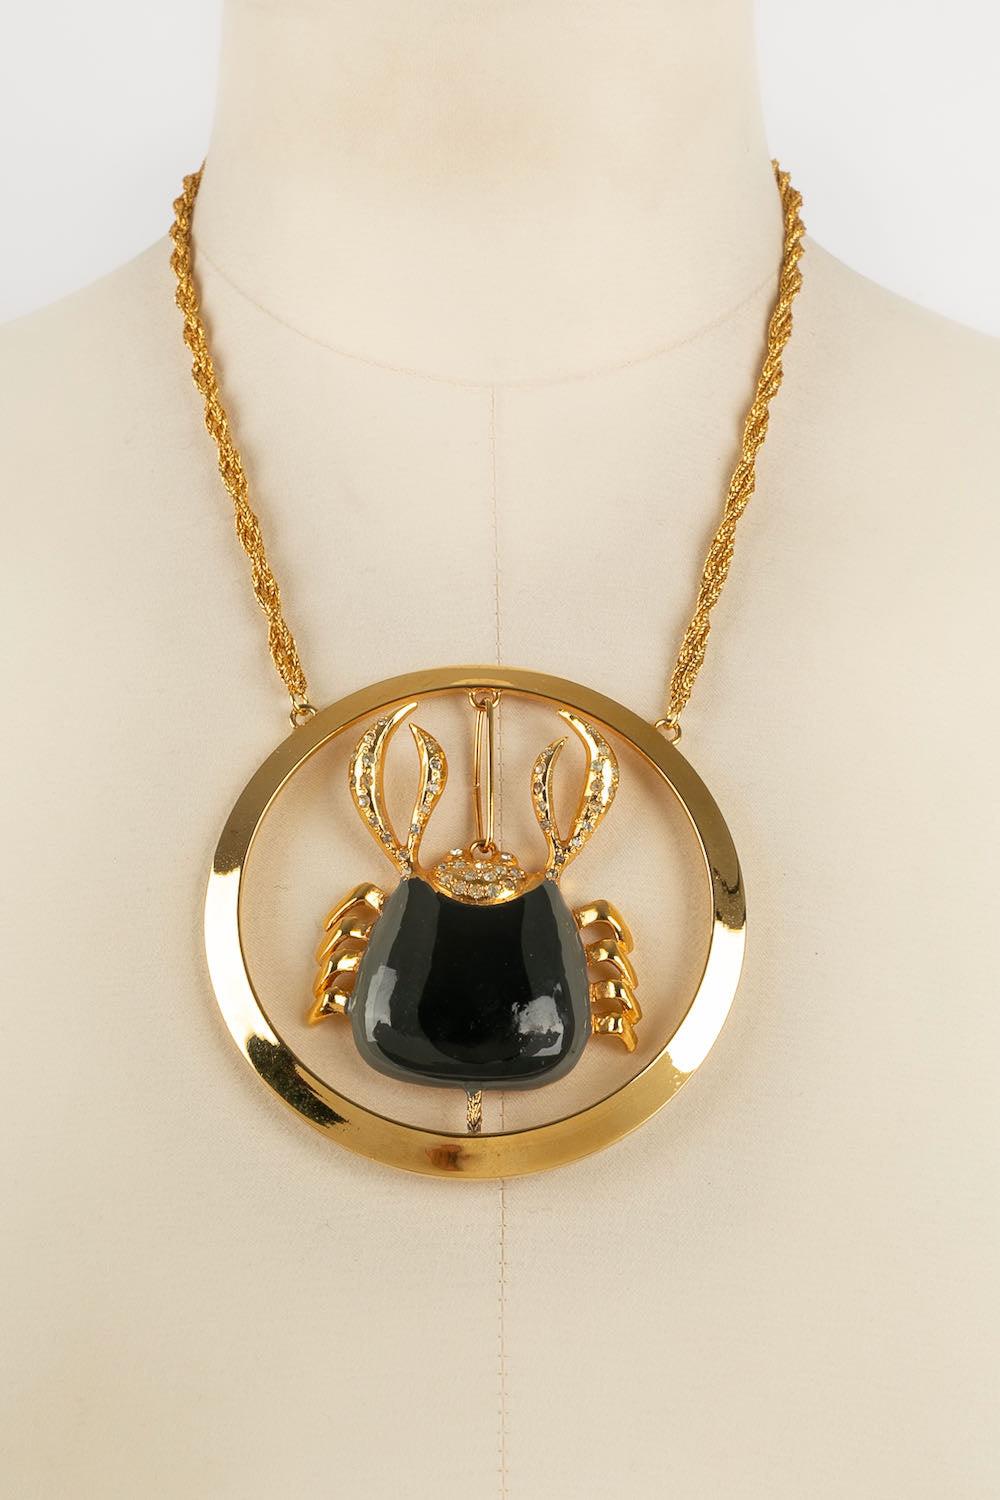 Pierre Cardin Crab Necklace in Golden Metal In Good Condition For Sale In SAINT-OUEN-SUR-SEINE, FR